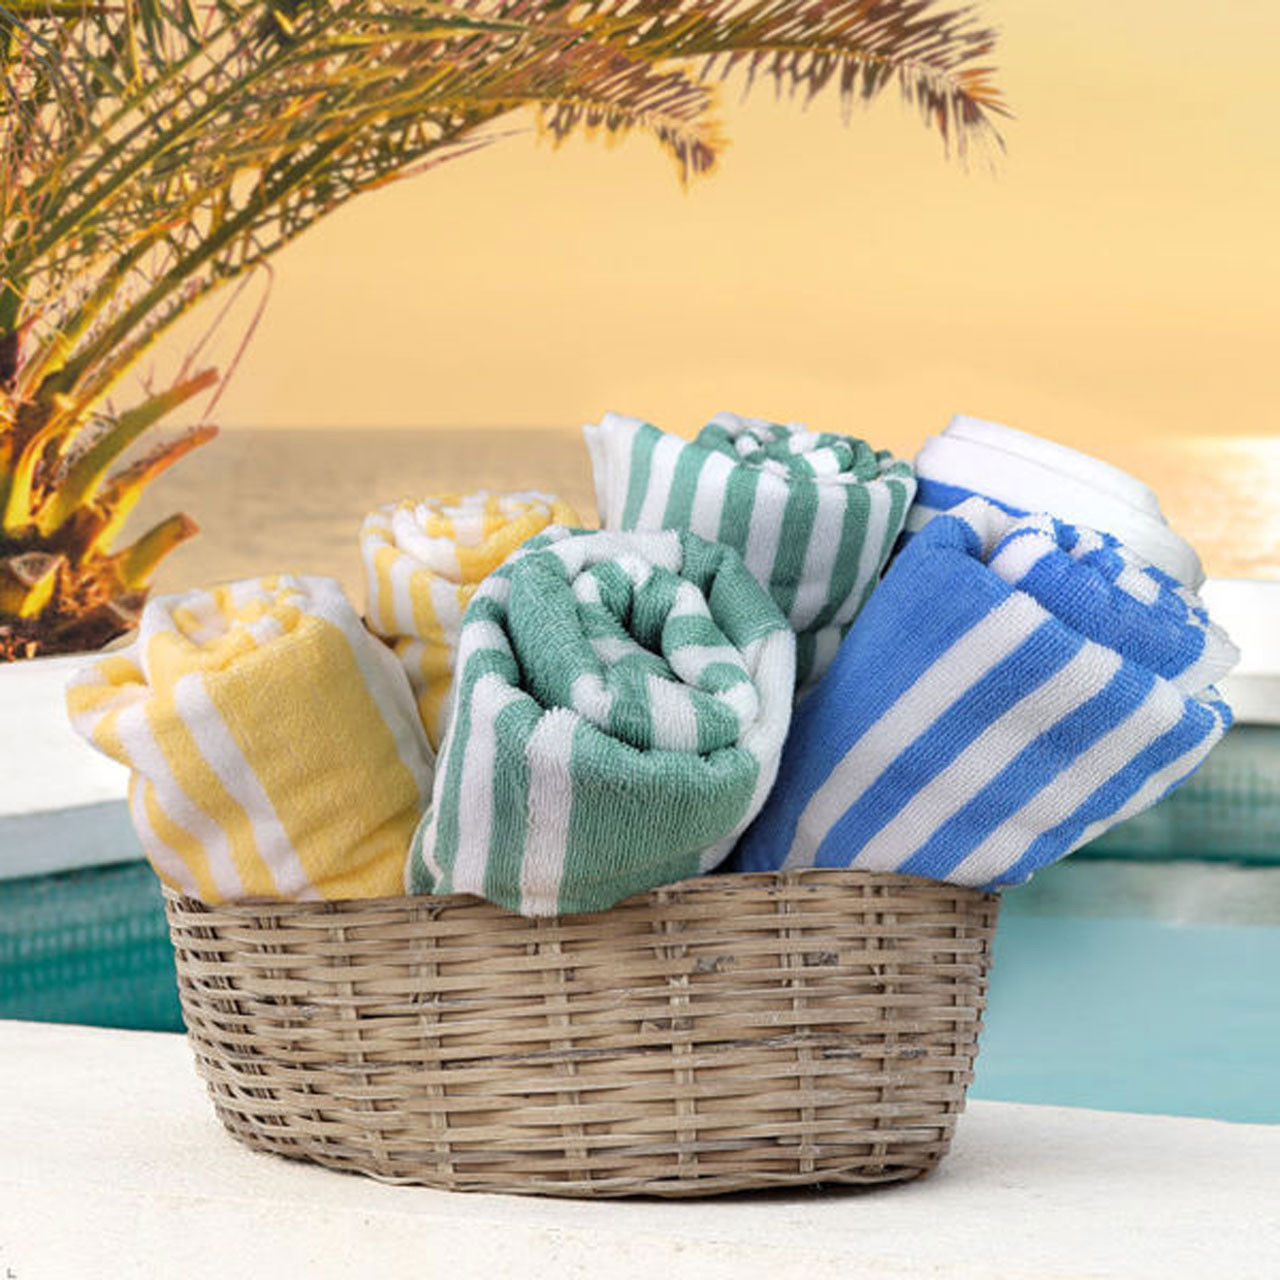 Can I purchase the Playa Cabana Stripe Bulk Beach Towels in bulk?